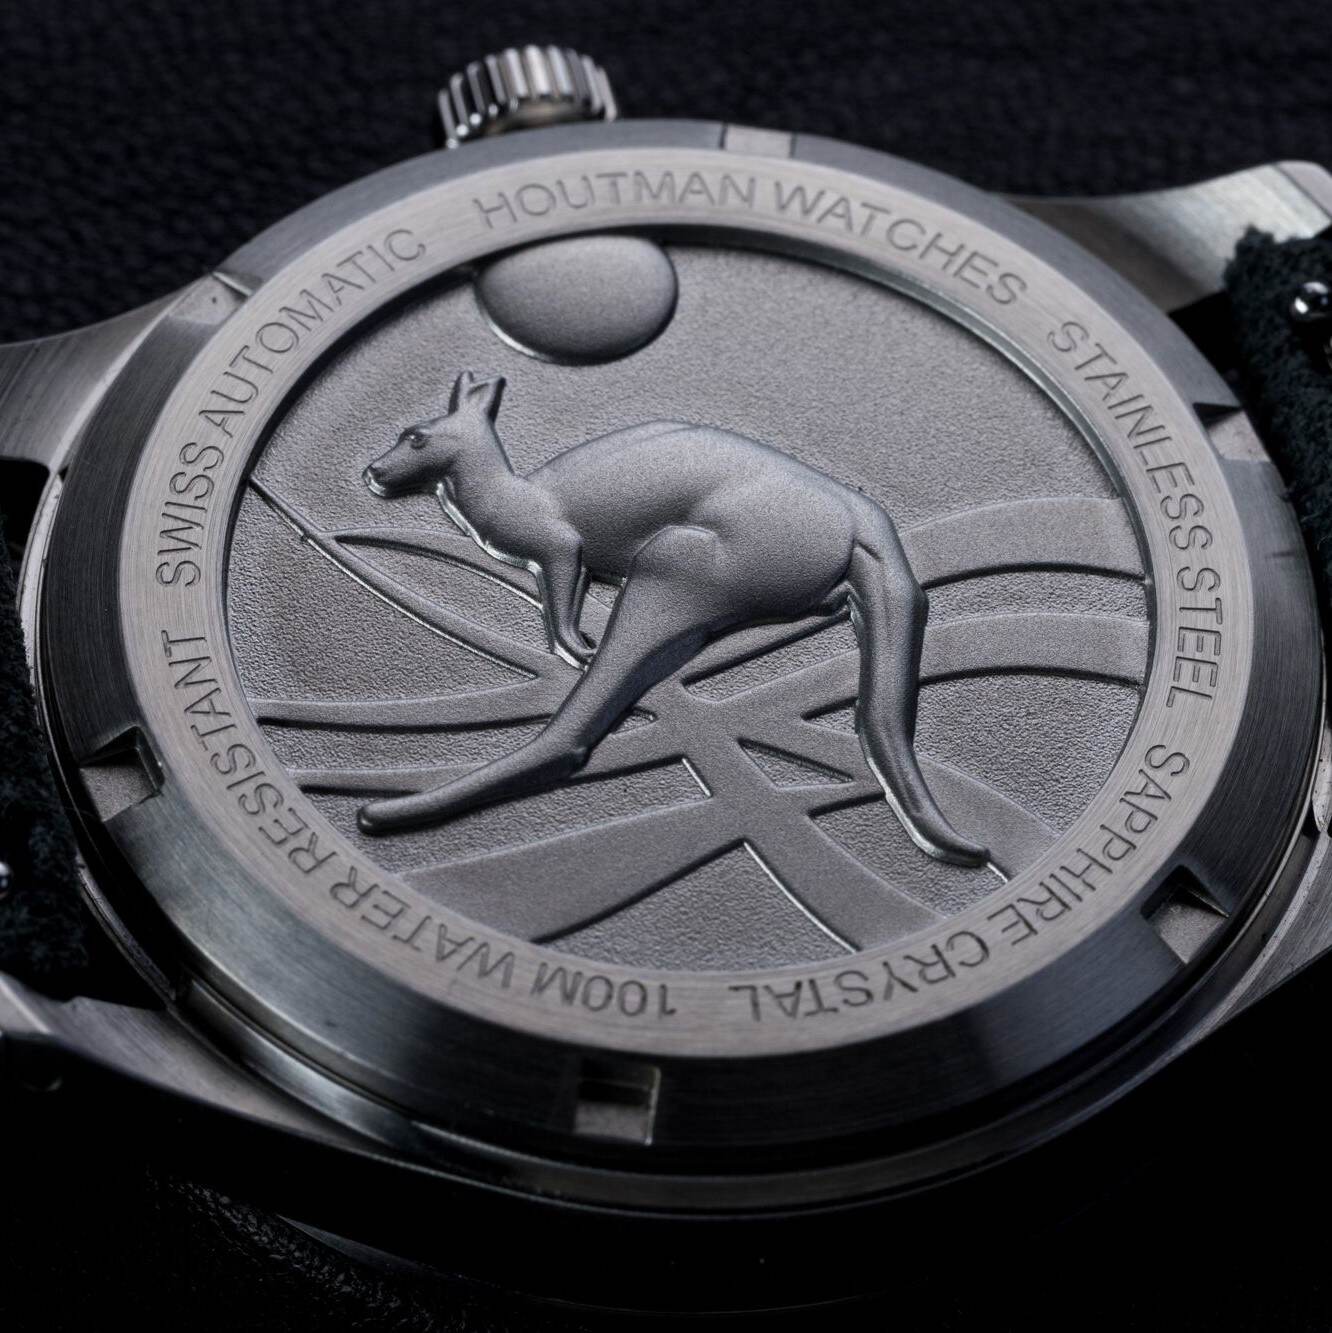 Australian watch brand Houtman Watches Murchison case back featuring a kangaroo